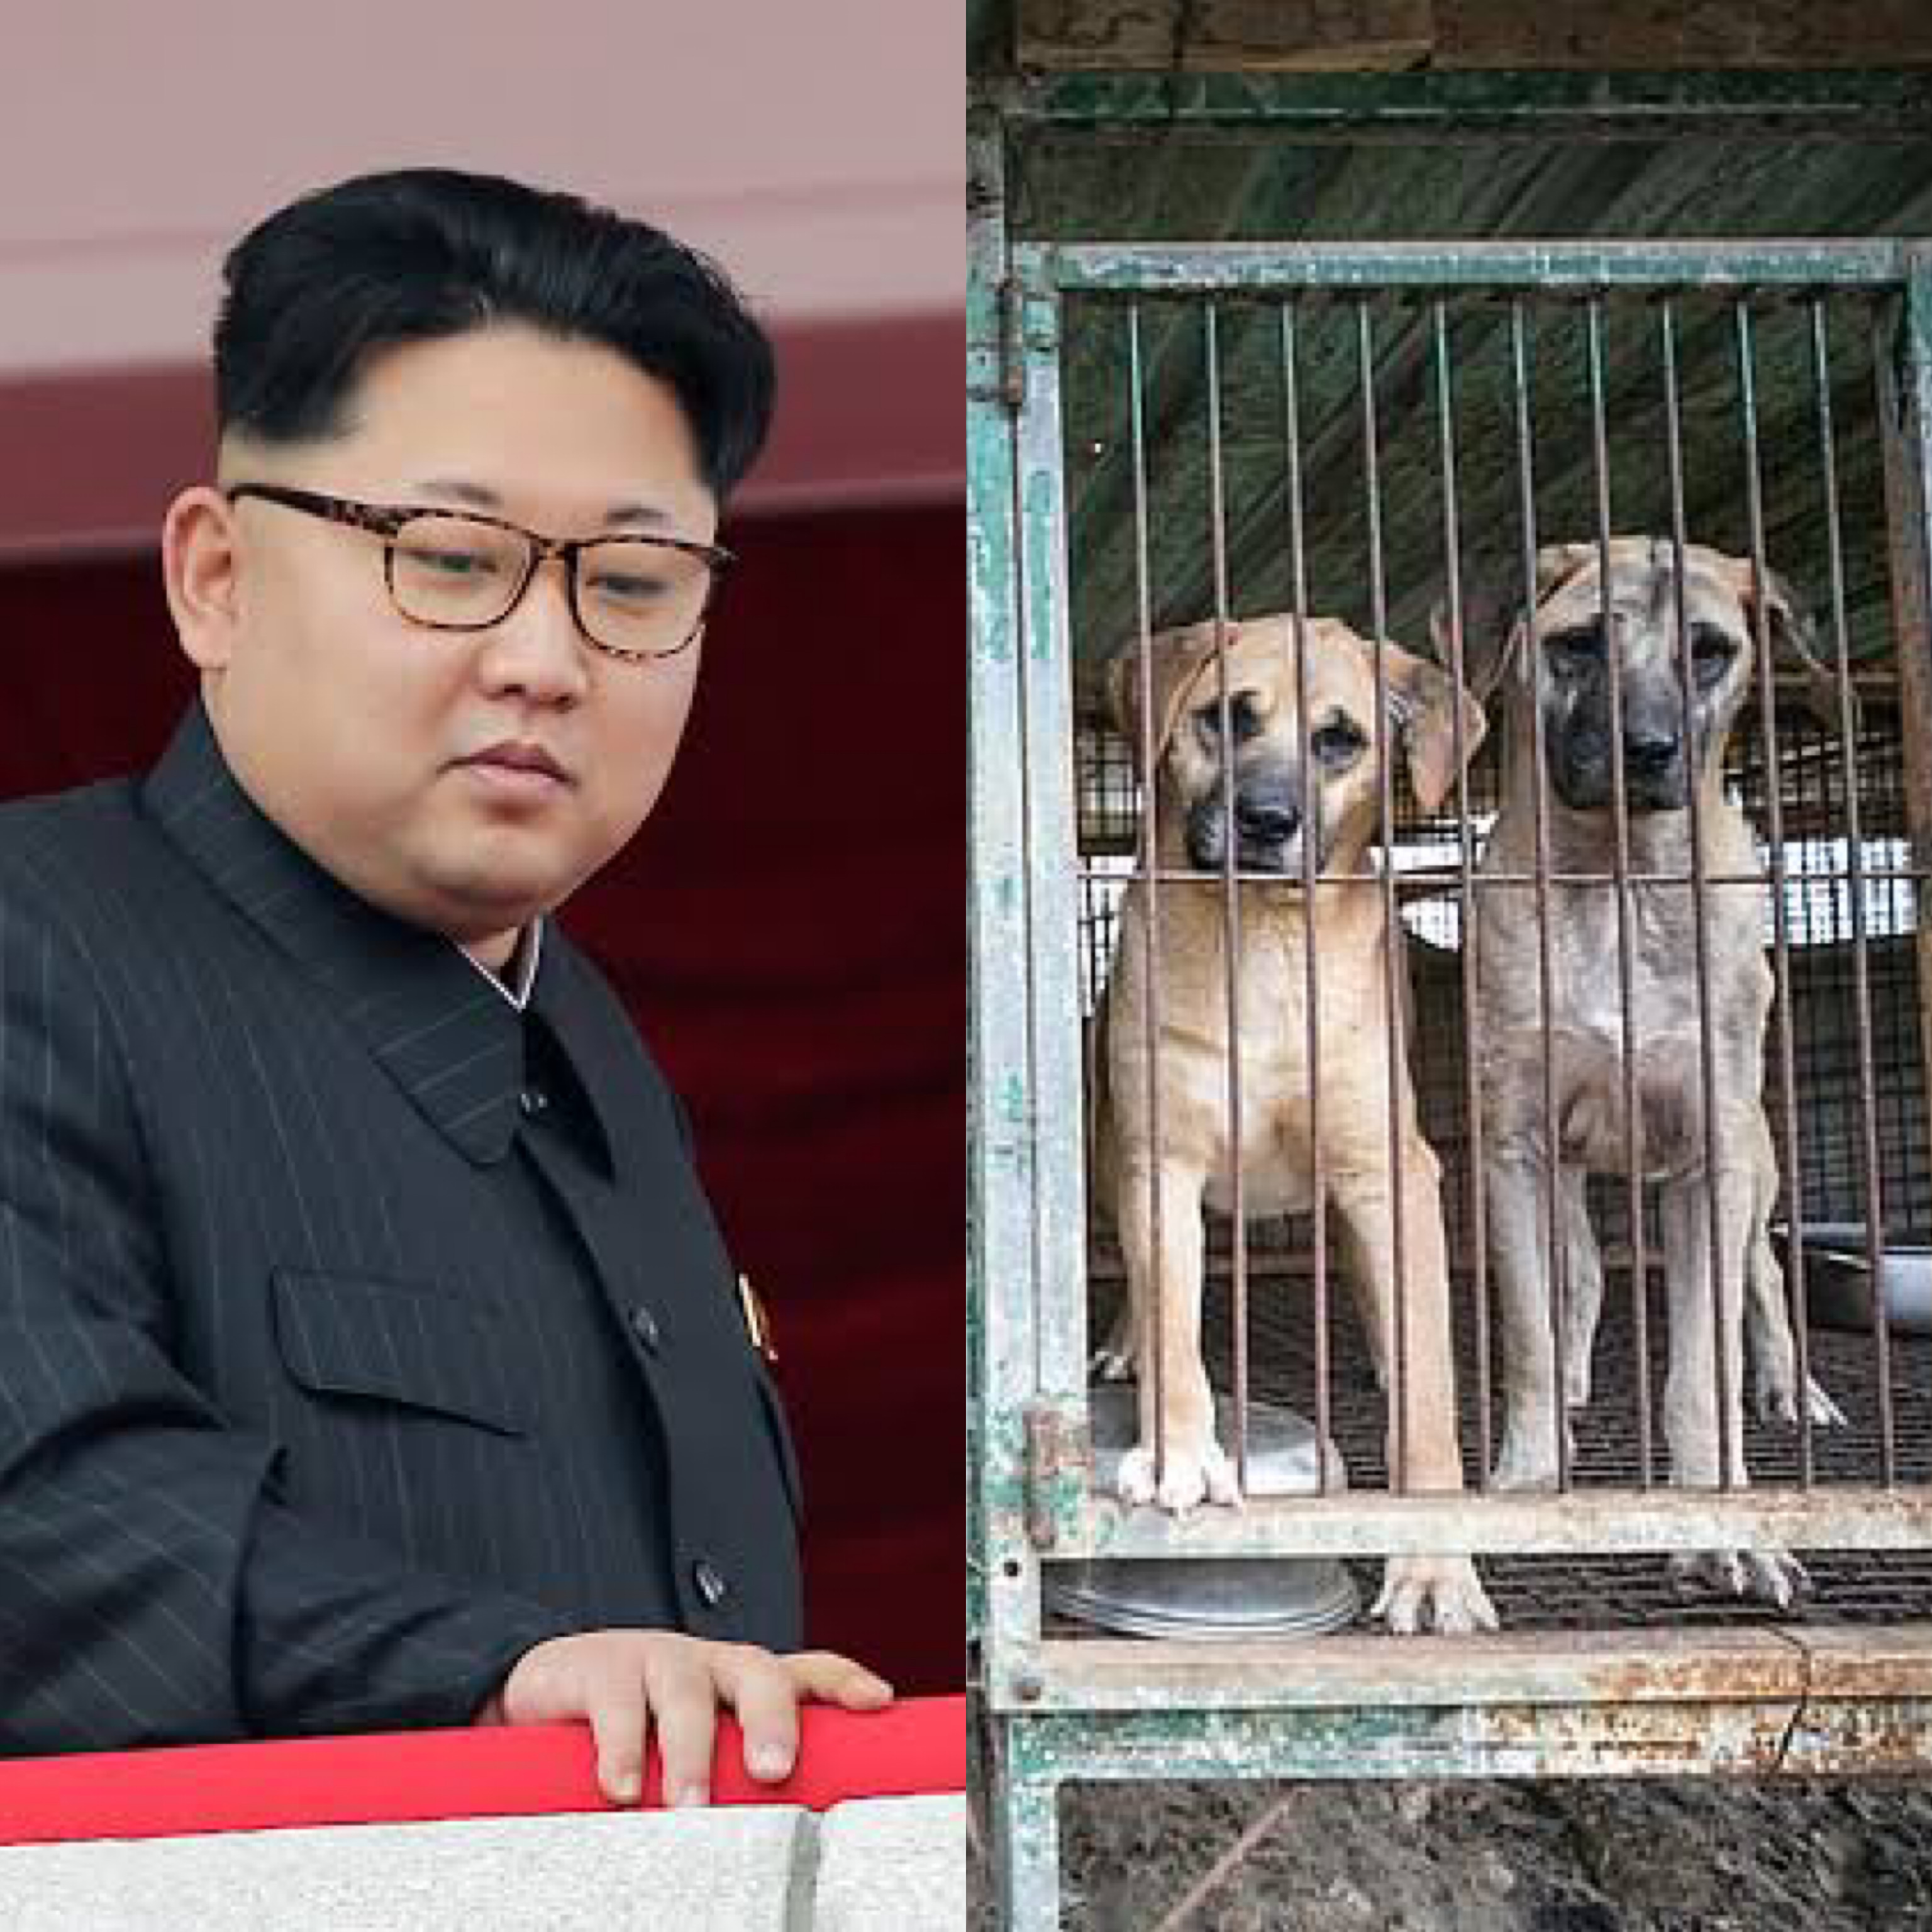 Kim Jong-Un, the Supreme Leader of North Korea